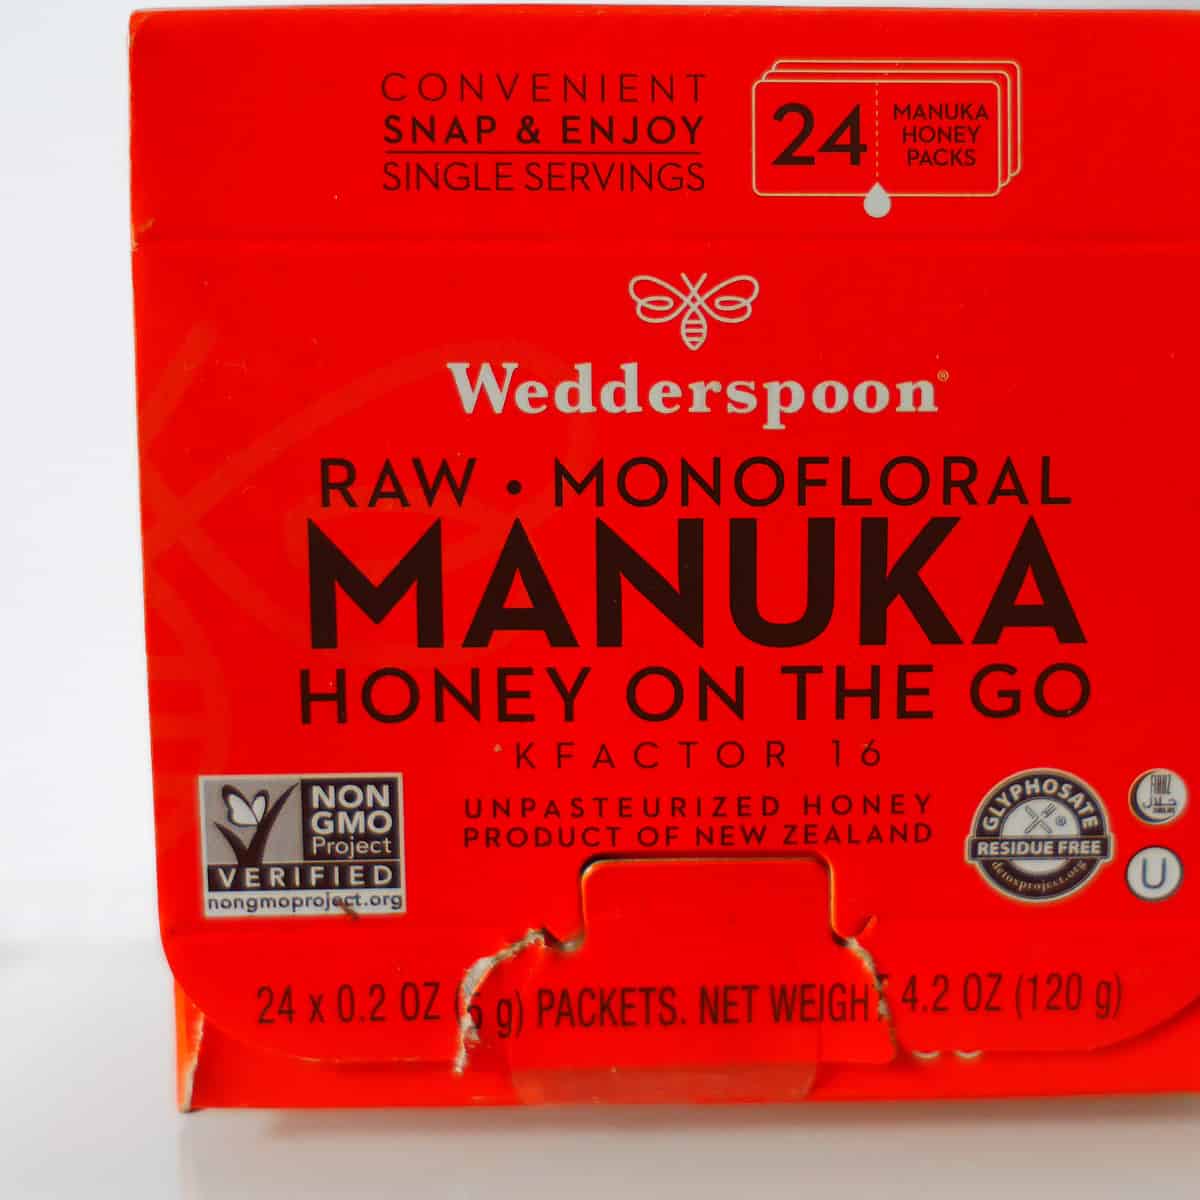 Wedderspoon on the go manuka honey